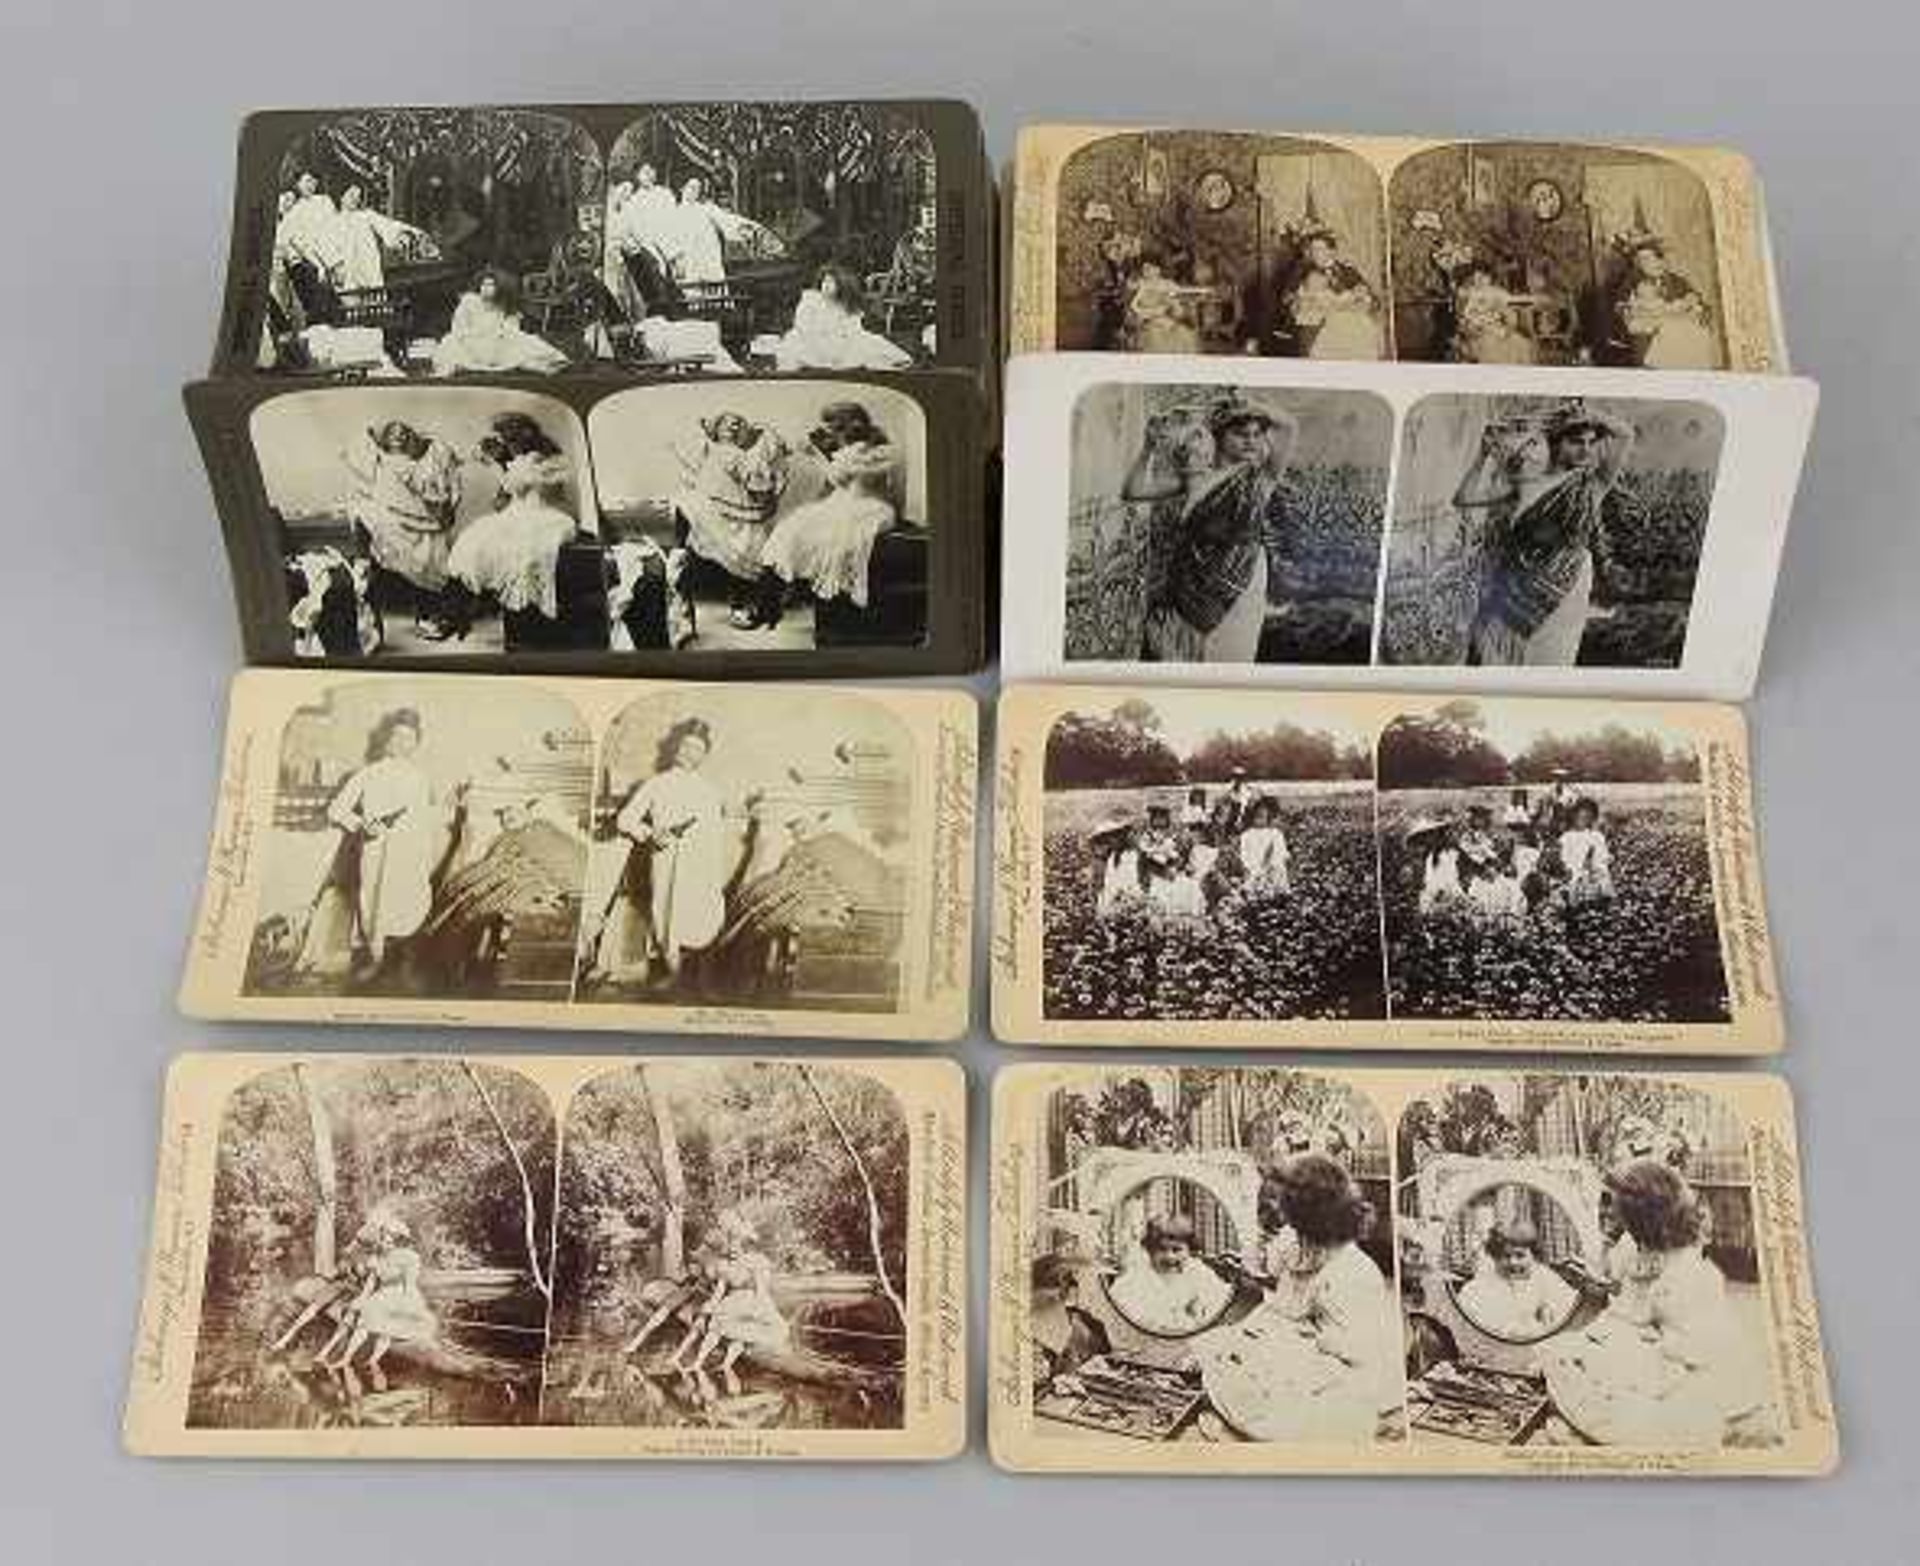 Large Bundle of 89 Stereoscopic Cards "Genre Szenes"